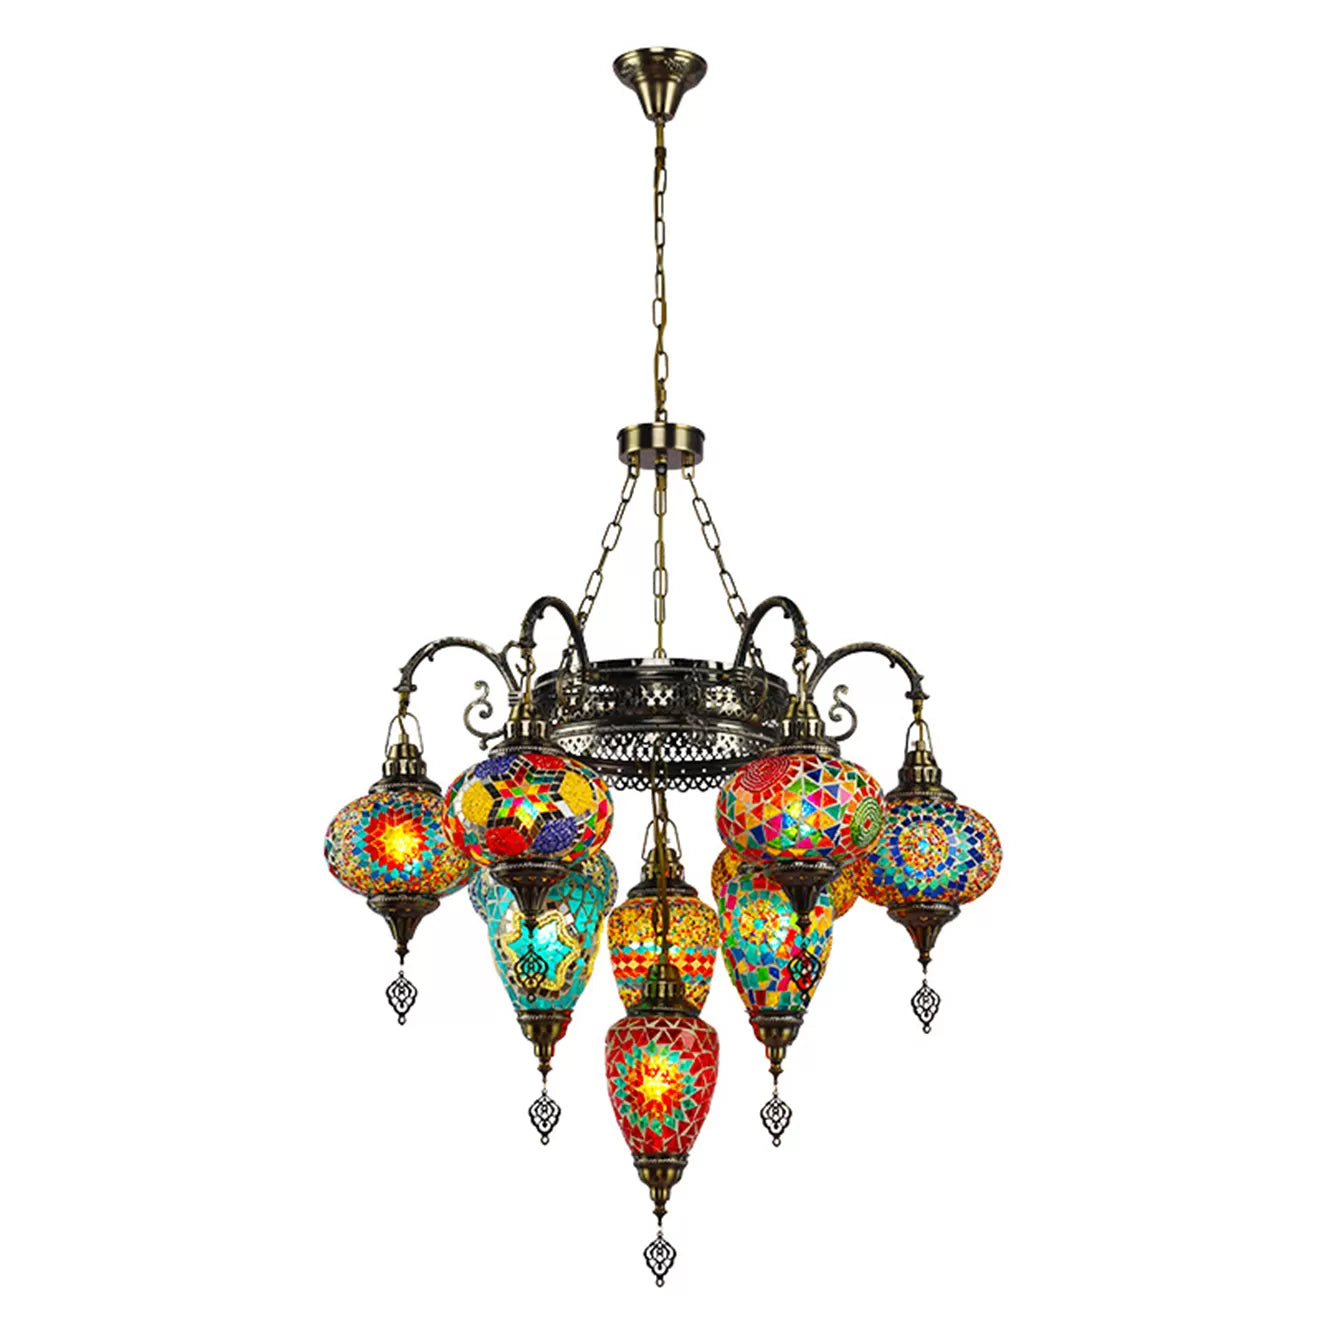 handmade-bohemian-style-ceiling-chandelier-Pandora-lamp-handcrafted-home-decor-multi-colour-beautiful-elegant-glass-metal